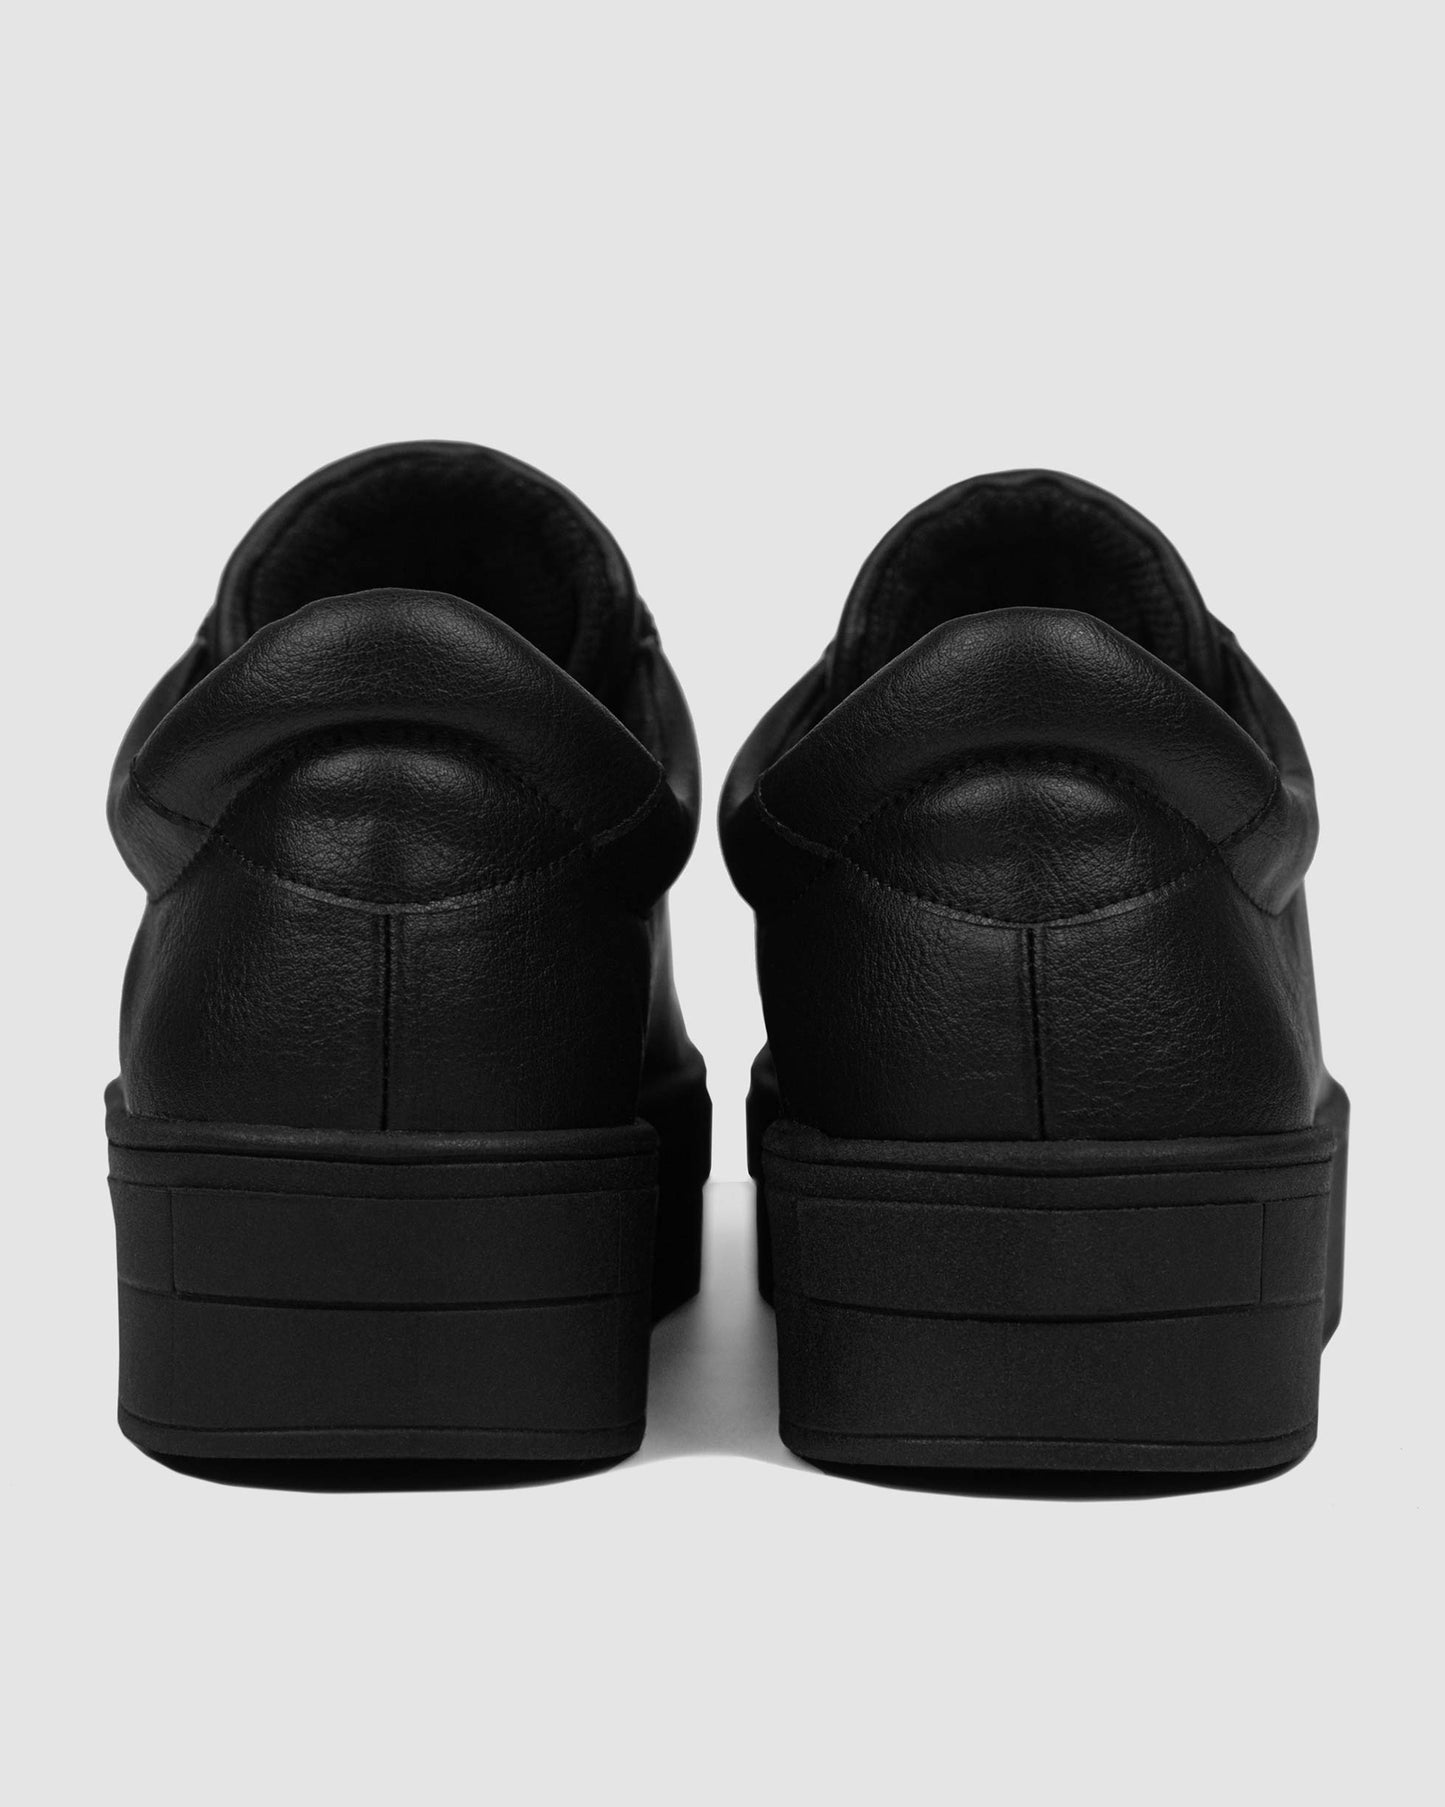 Bohema Sneakers Aware Black sneakers made of Vegea grape leather